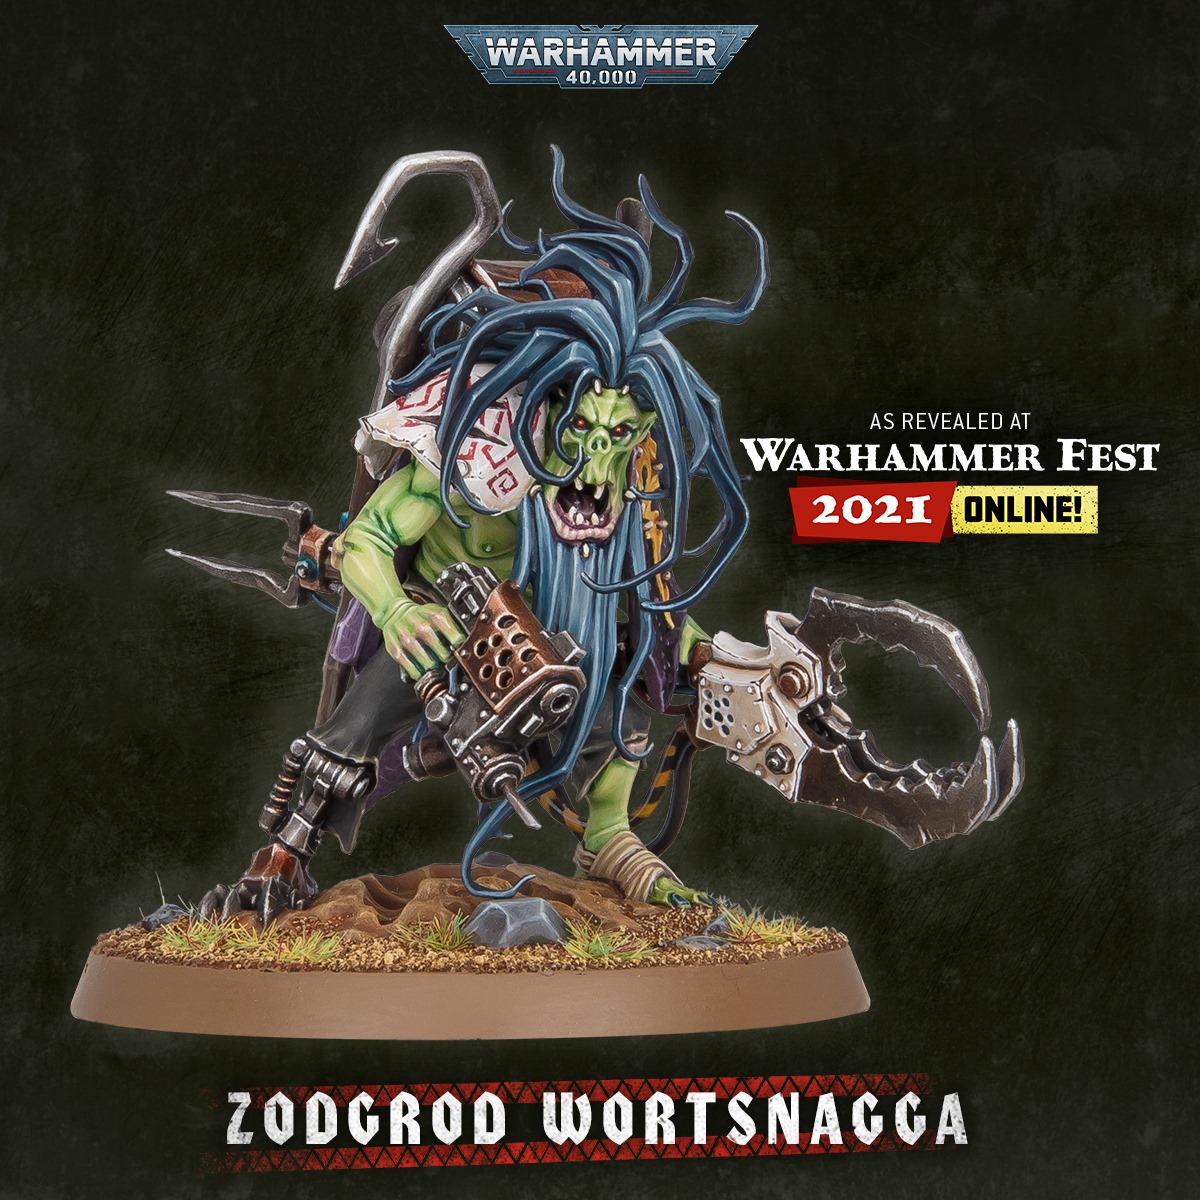 Zodgrod Wortsnagga - Warhammer 40K